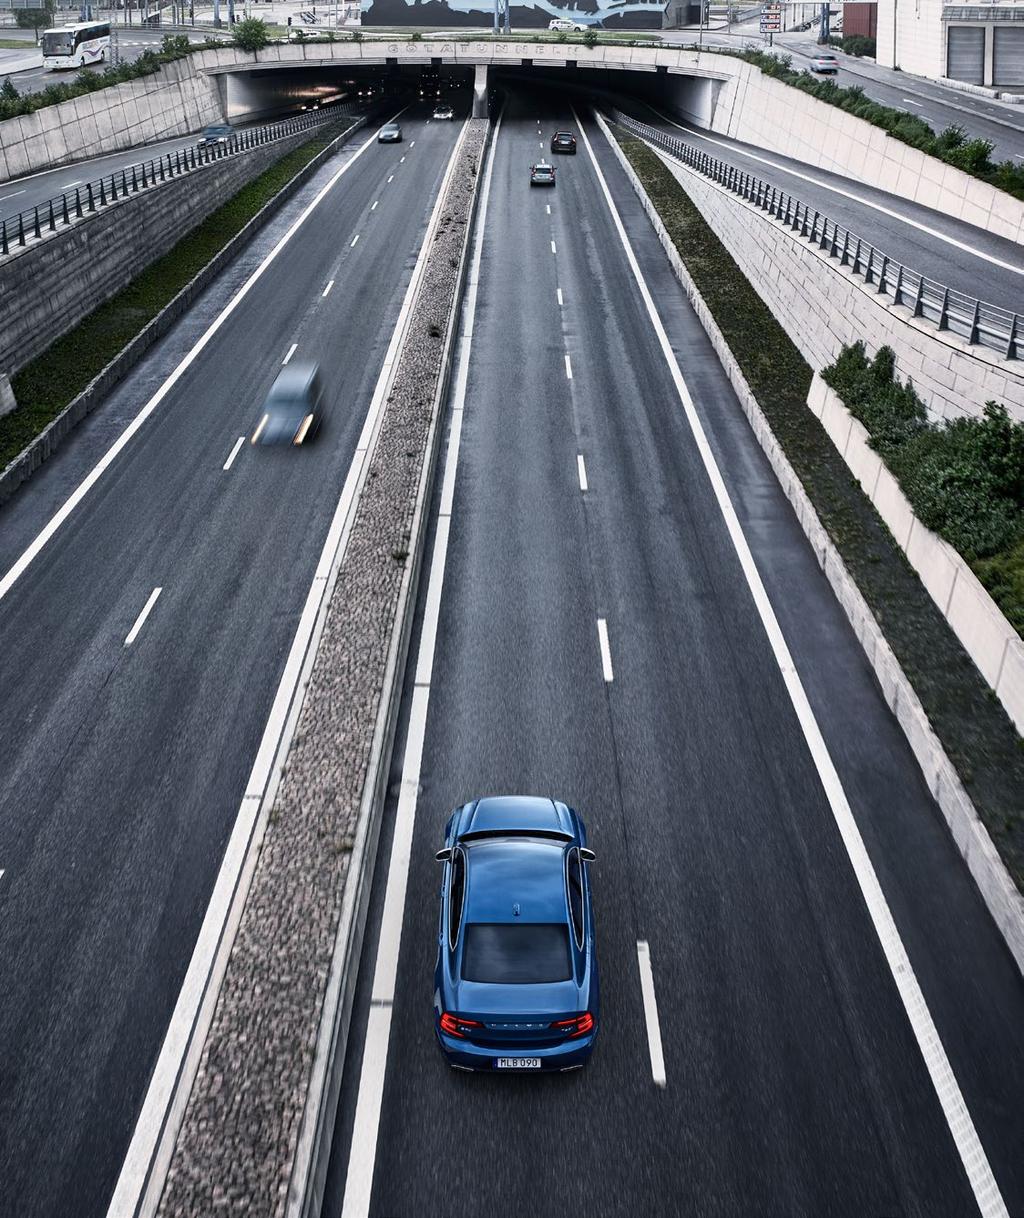 Redefining safety every day Volvo S90 21 Pilot assist. Designed to make driving safer and easier. 볼보의최신반자율주행기술을통해정차시에는물론고속도로주행시까지부드럽고직관적인주행을즐길수있습니다.